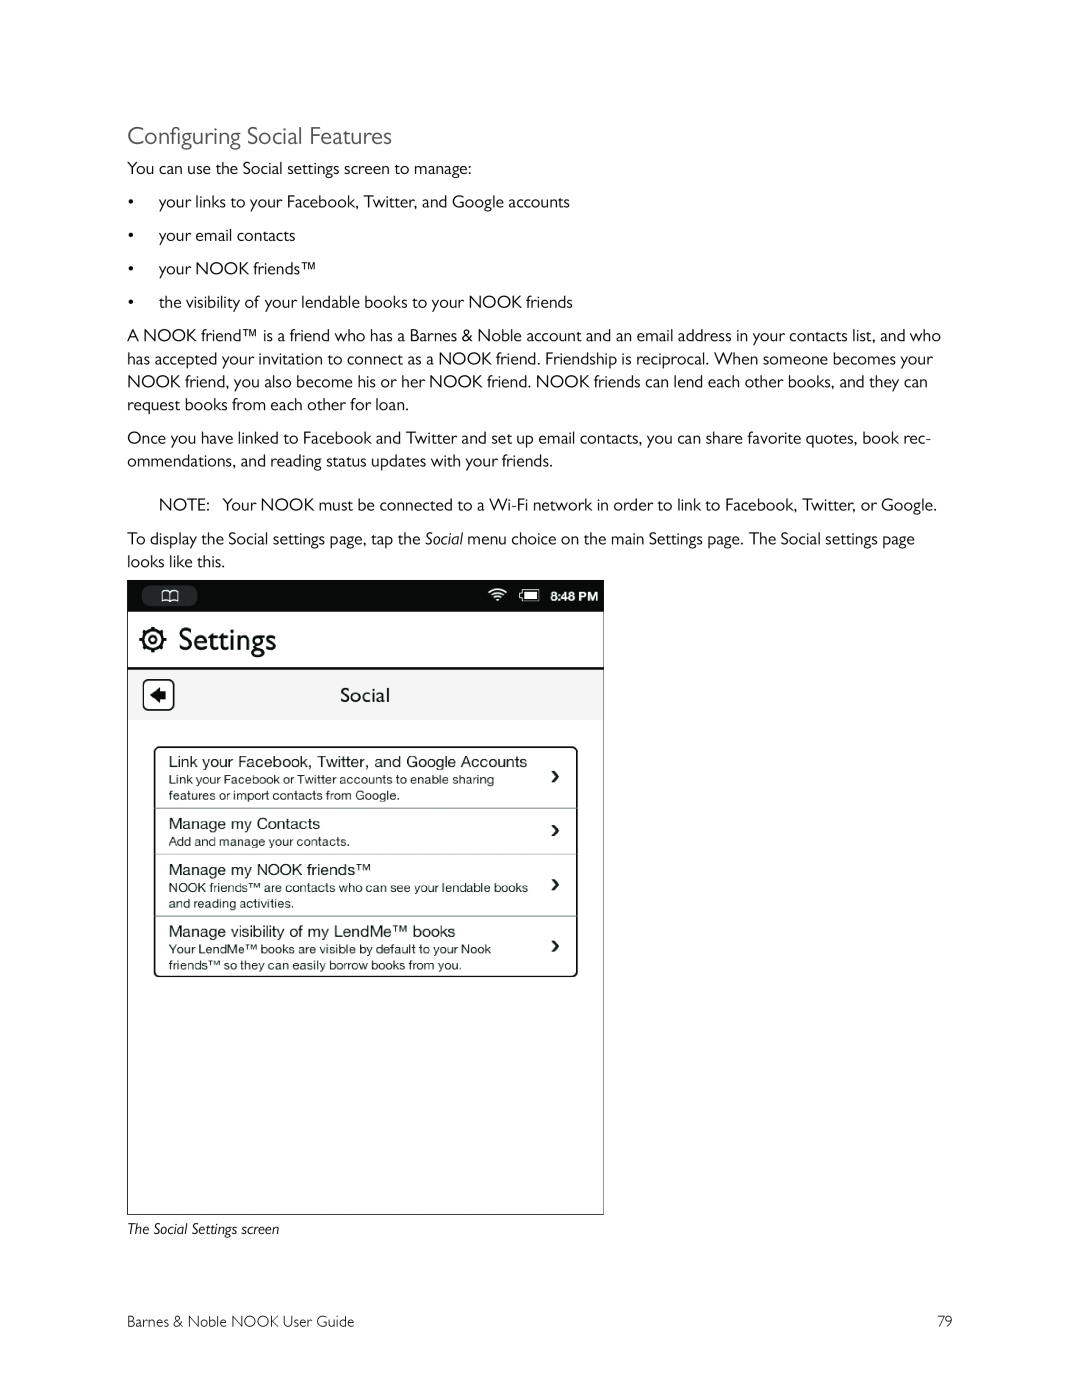 Barnes & Noble BNRV300 manual Configuring Social Features 